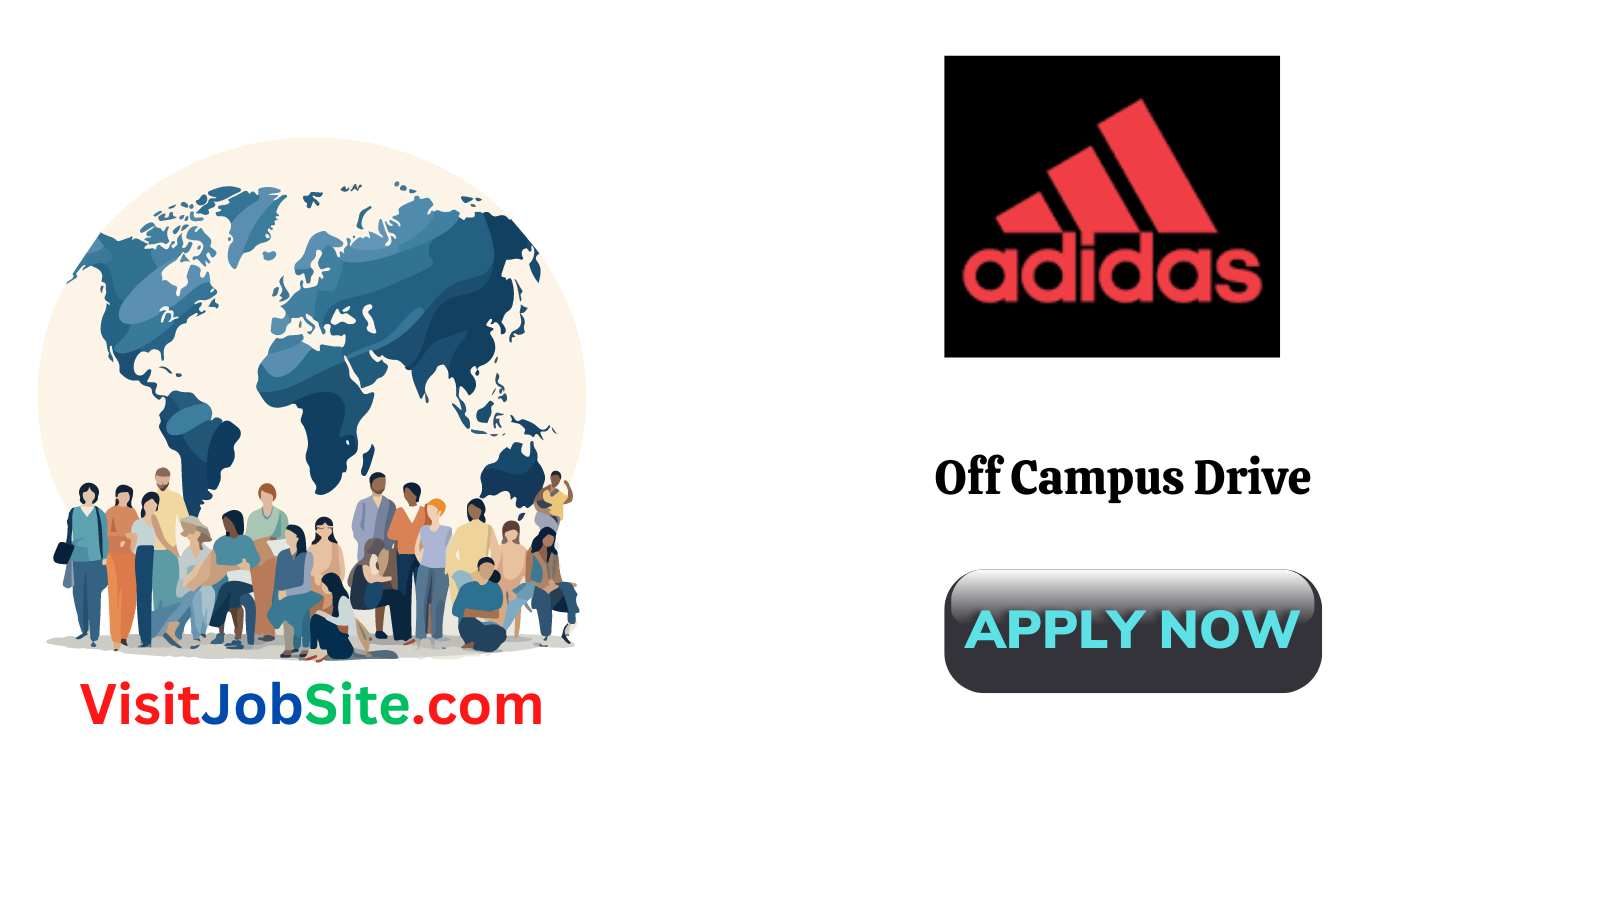 Adidas Off Campus Drive